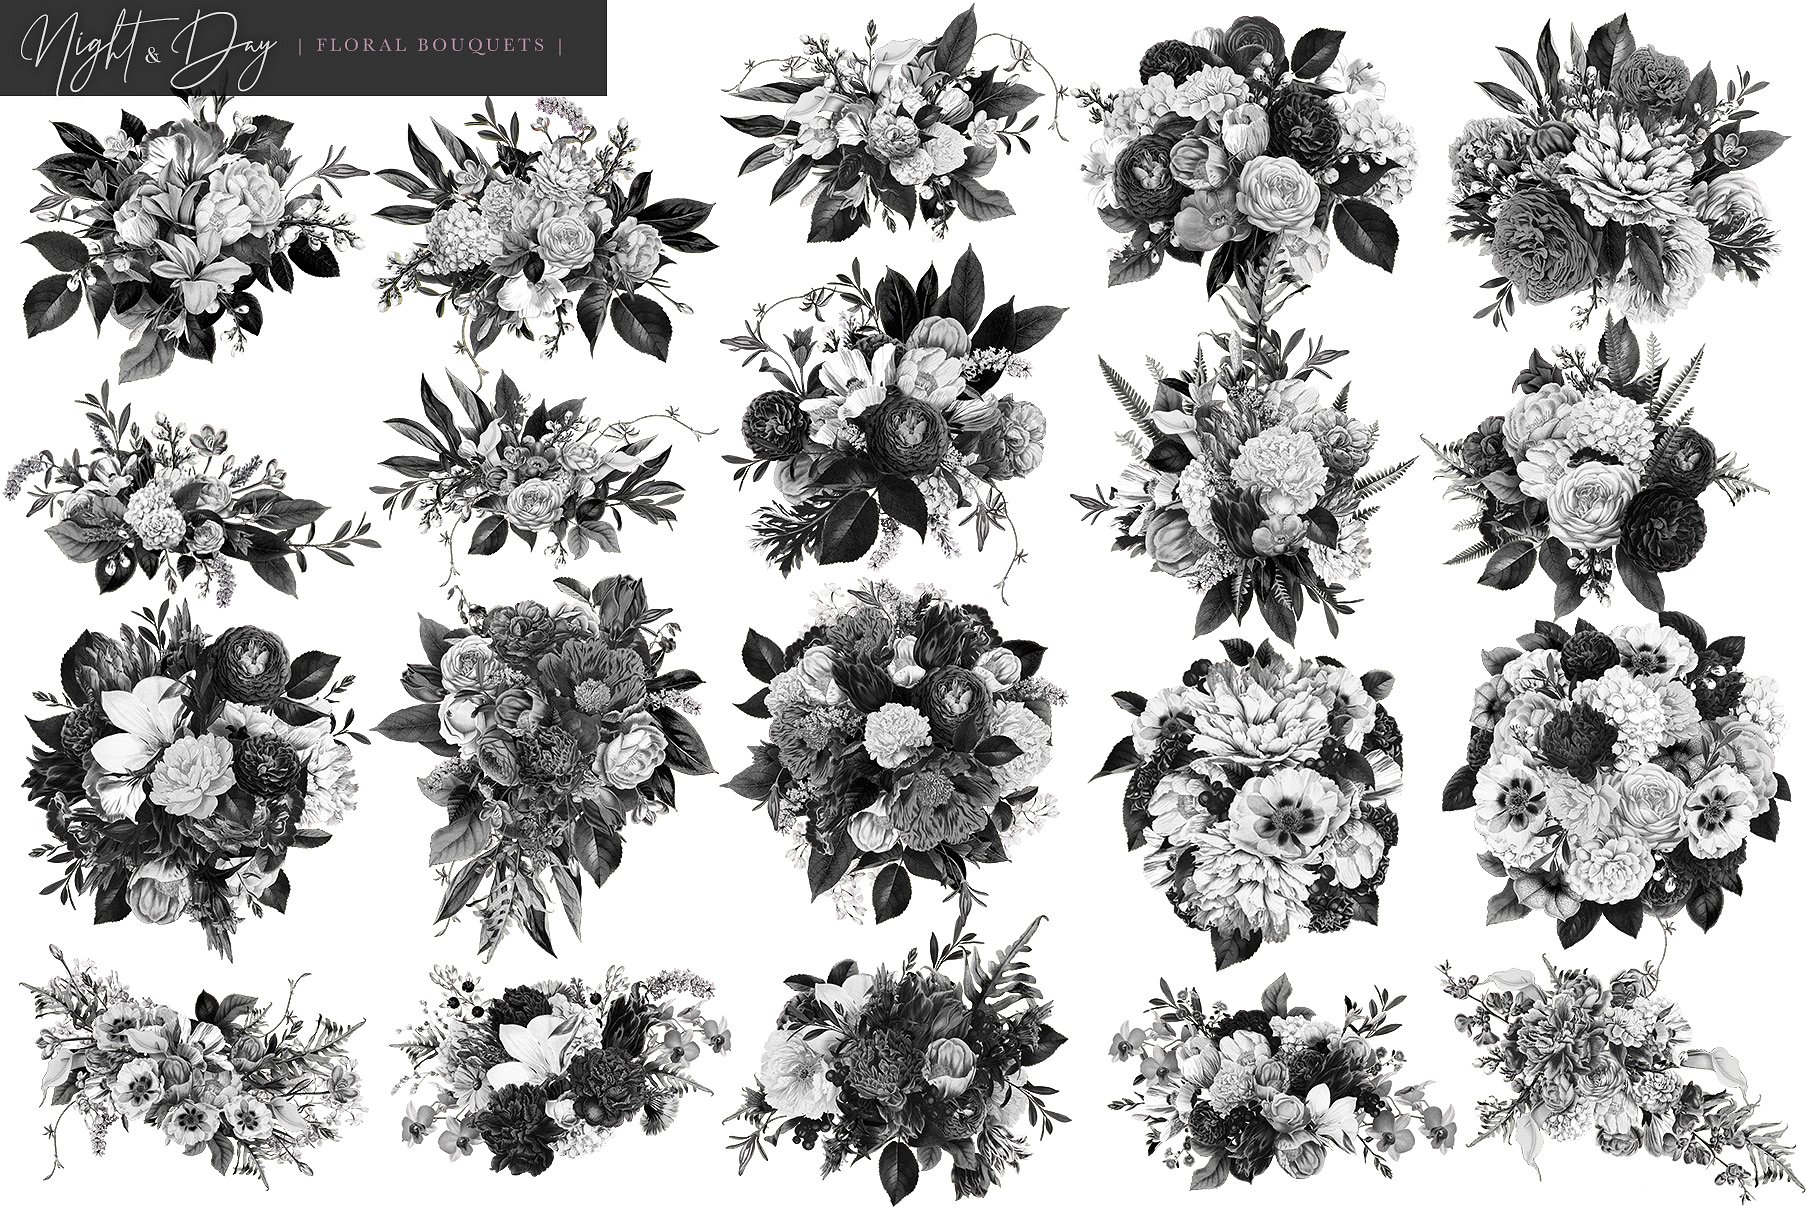 令人惊叹复古花朵日与夜花卉集 Night and Day Floral Bouquets插图10